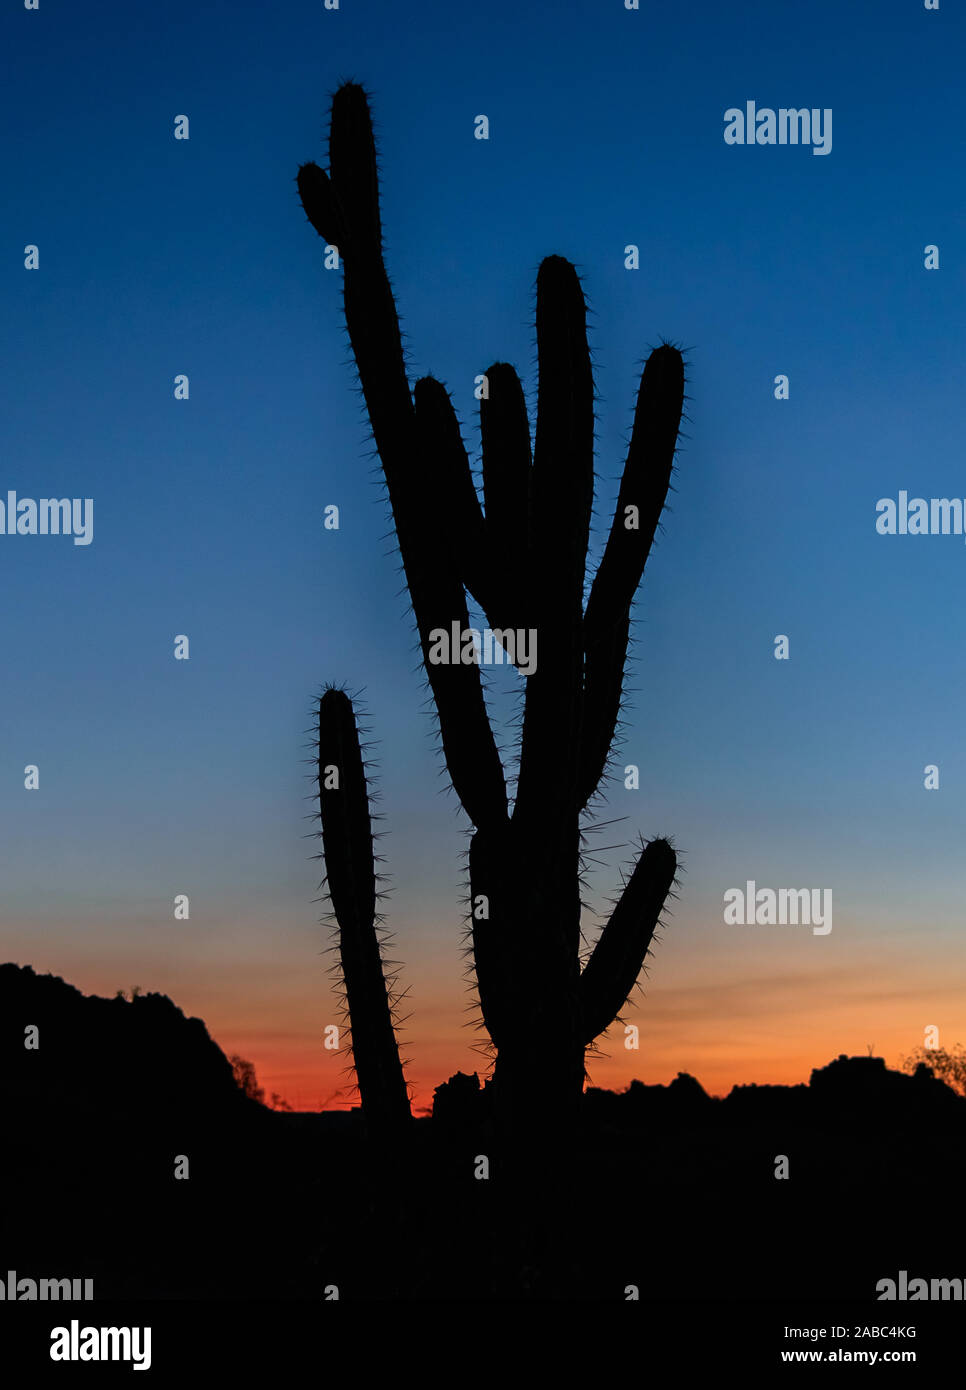 Riesigen Kakteen steht gegen die bunten Himmel bei Sonnenuntergang in der wasserarmen Region Cerrado. Canudos, NE Brasilien, Südamerika. Stockfoto